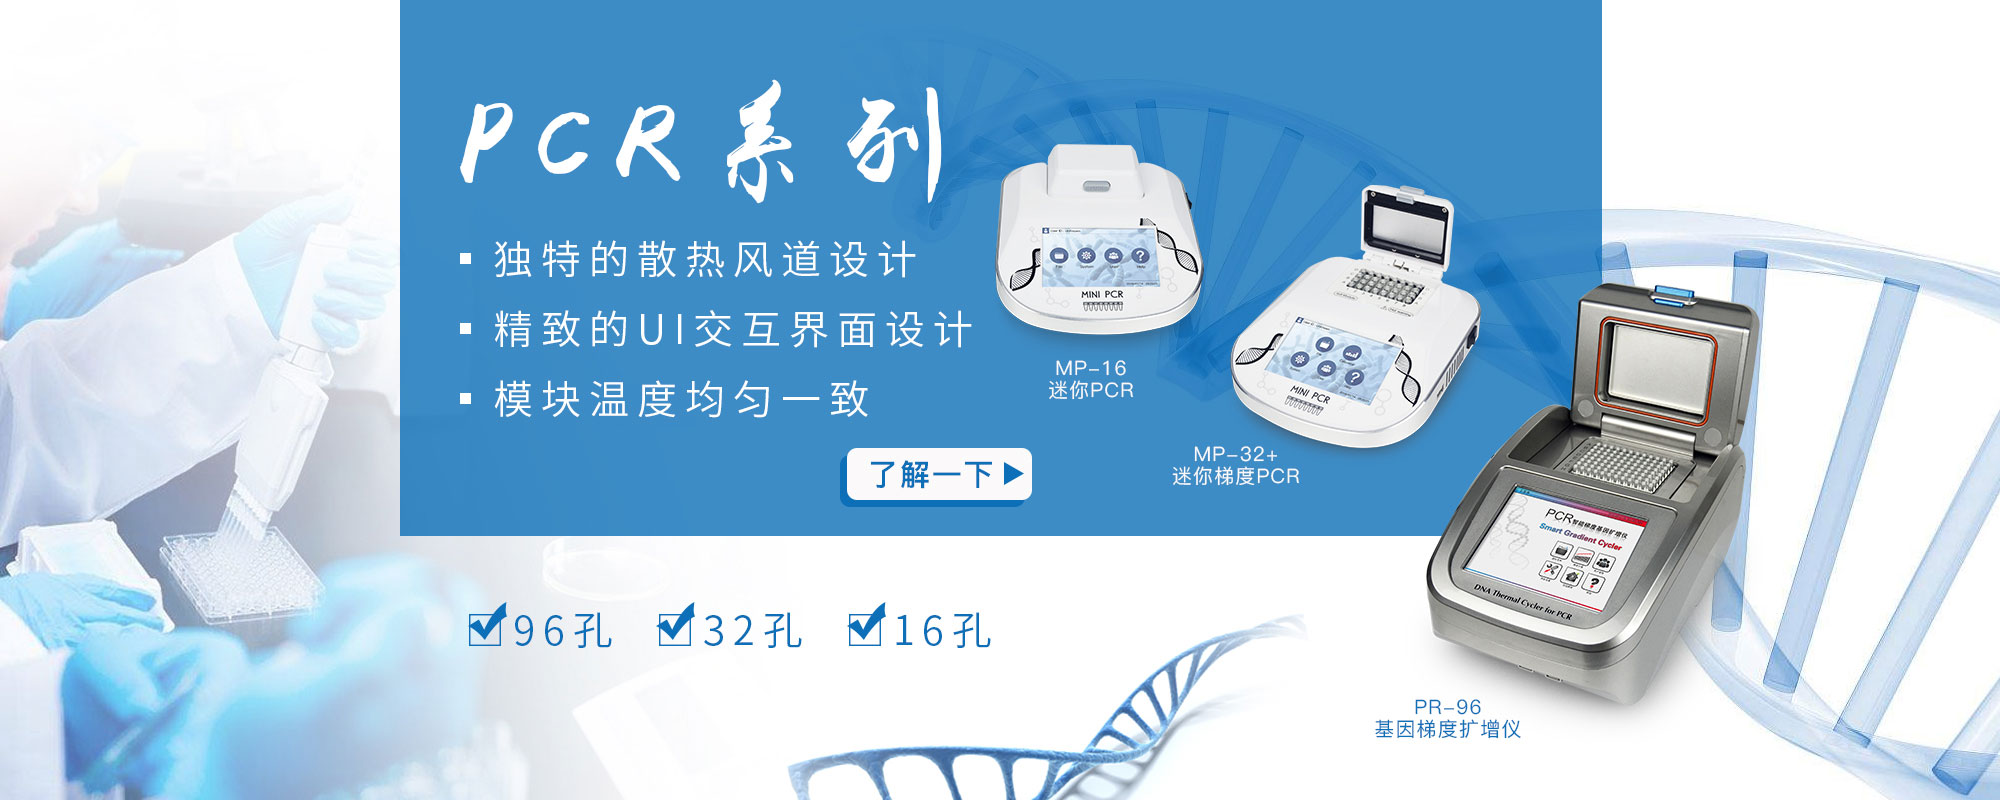 PCR系列